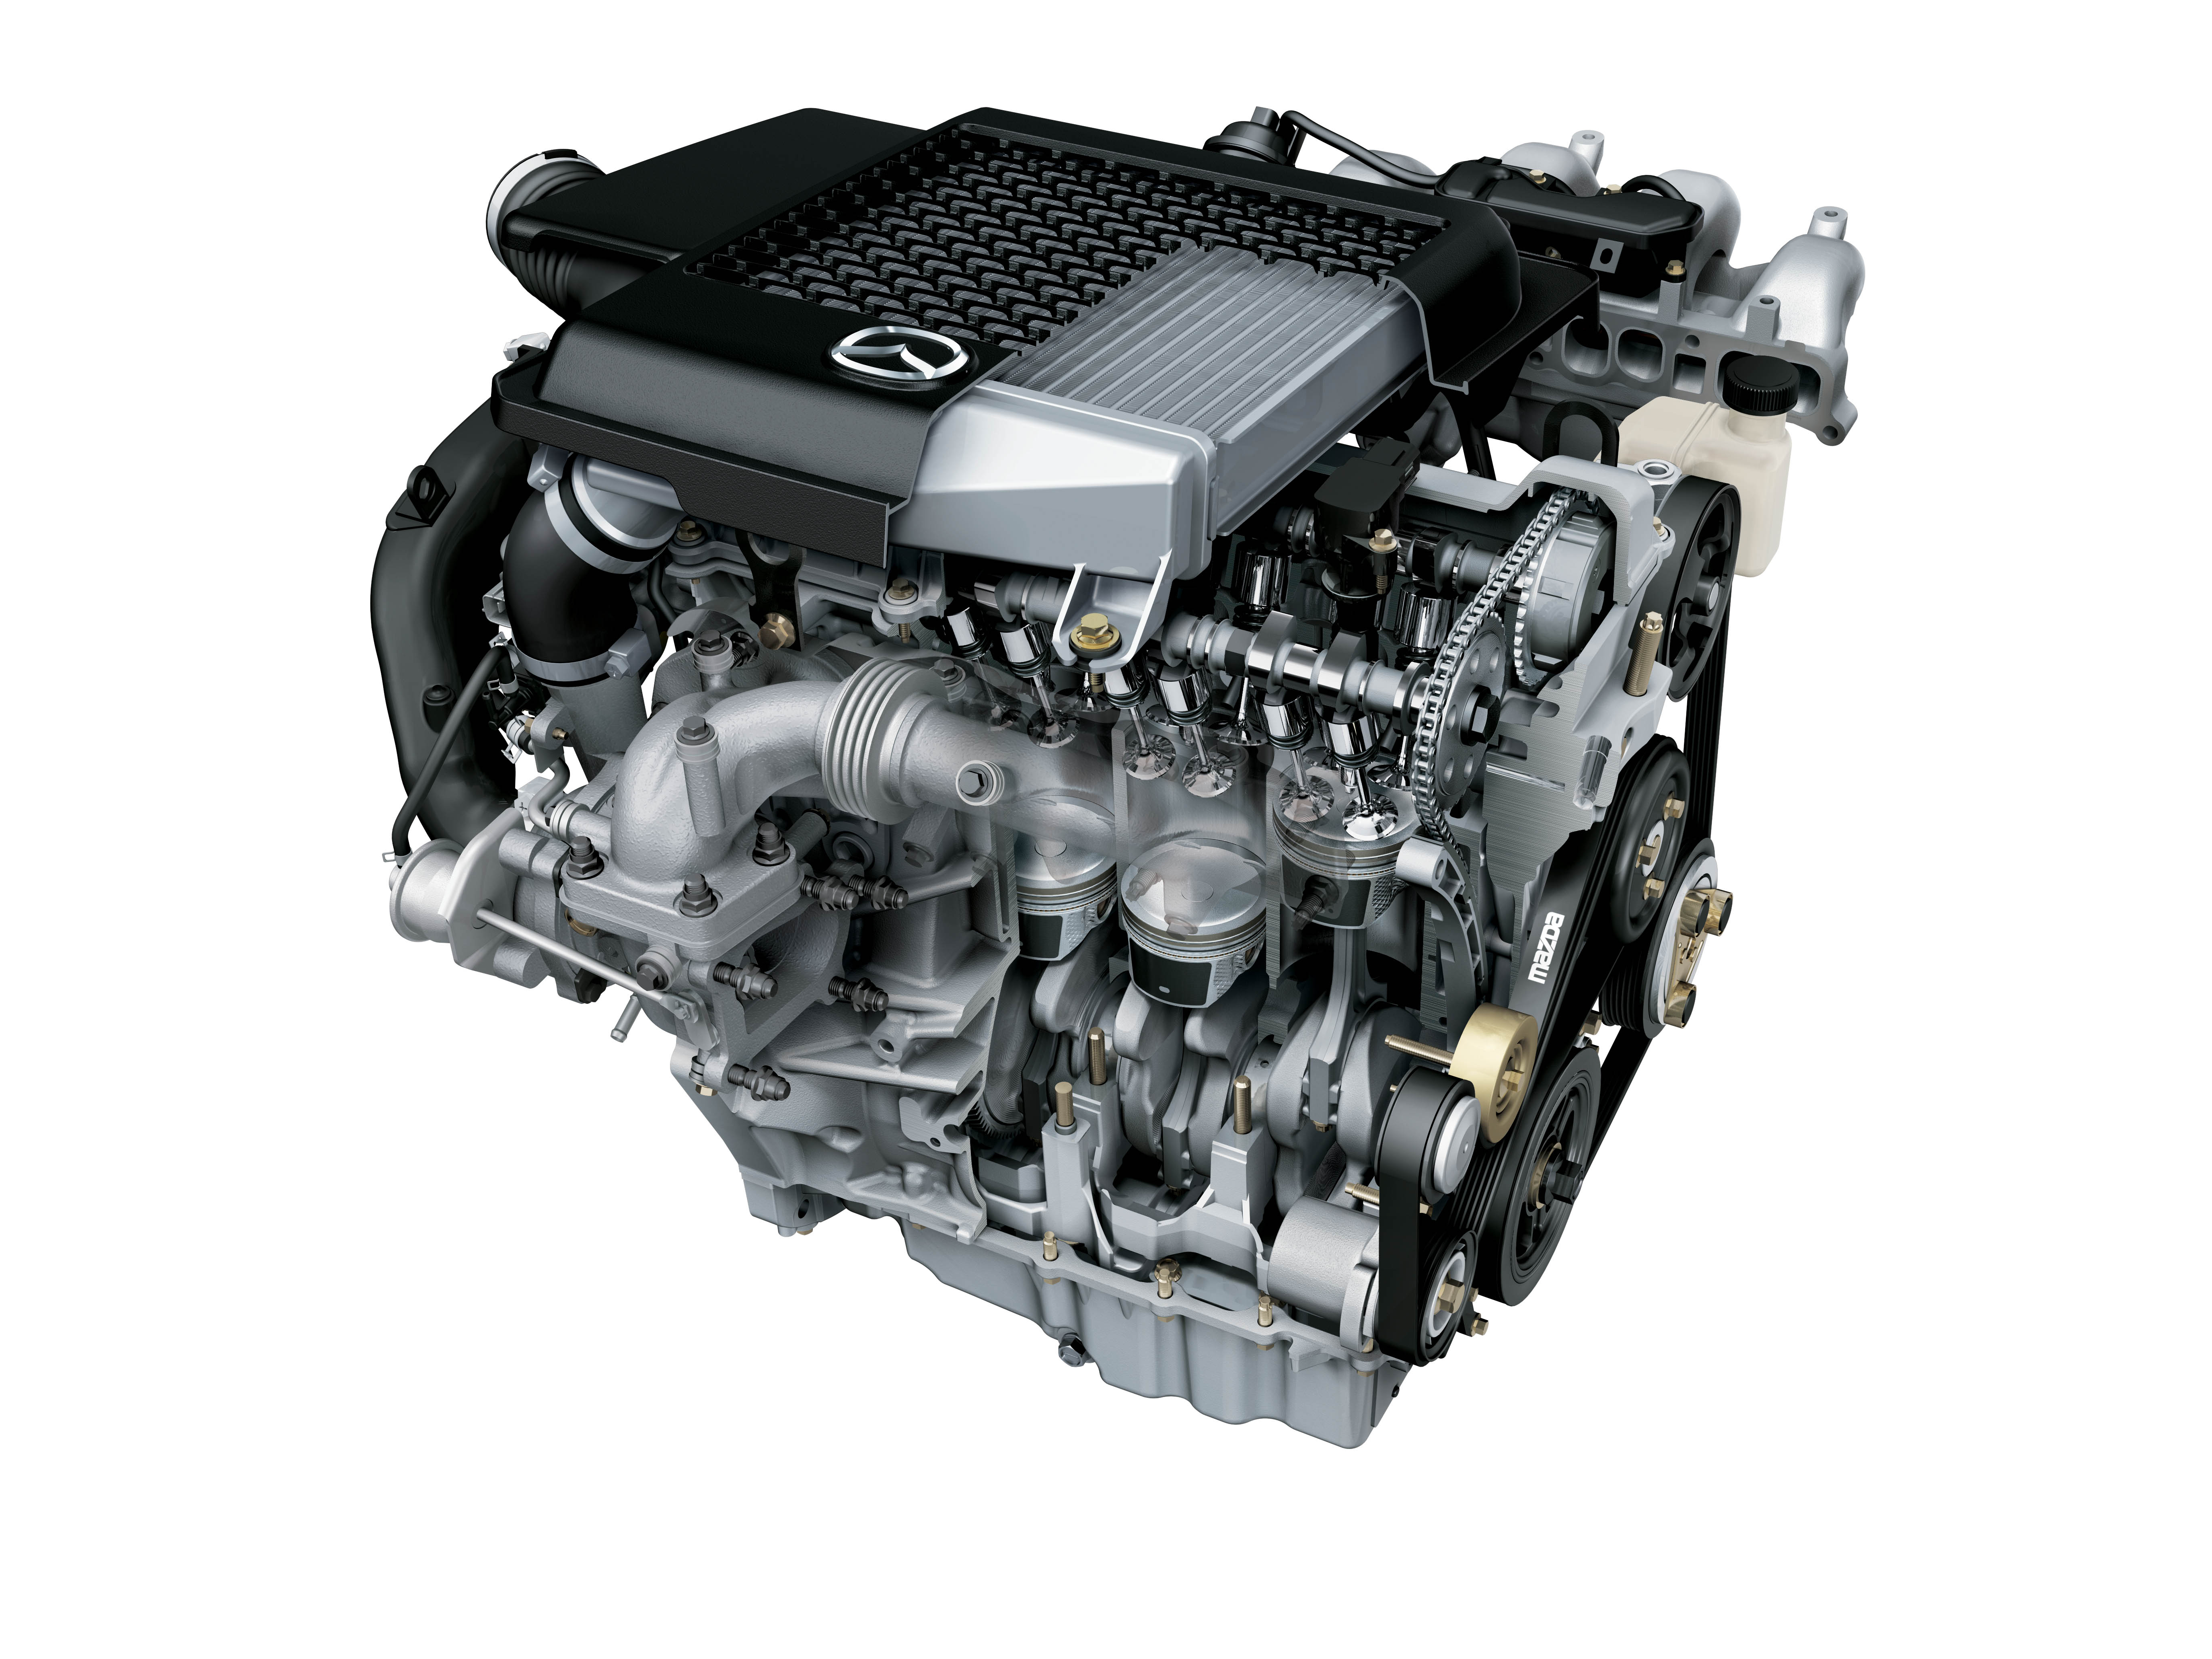 Купить двигатель 3l. Mazda cx7 2.3 Turbo двигатель. Двигатель Мазда СХ-7 2.3 турбо. Mazda MZR 2.3. Двигатель Мазда CX 7 2.3 турбо.